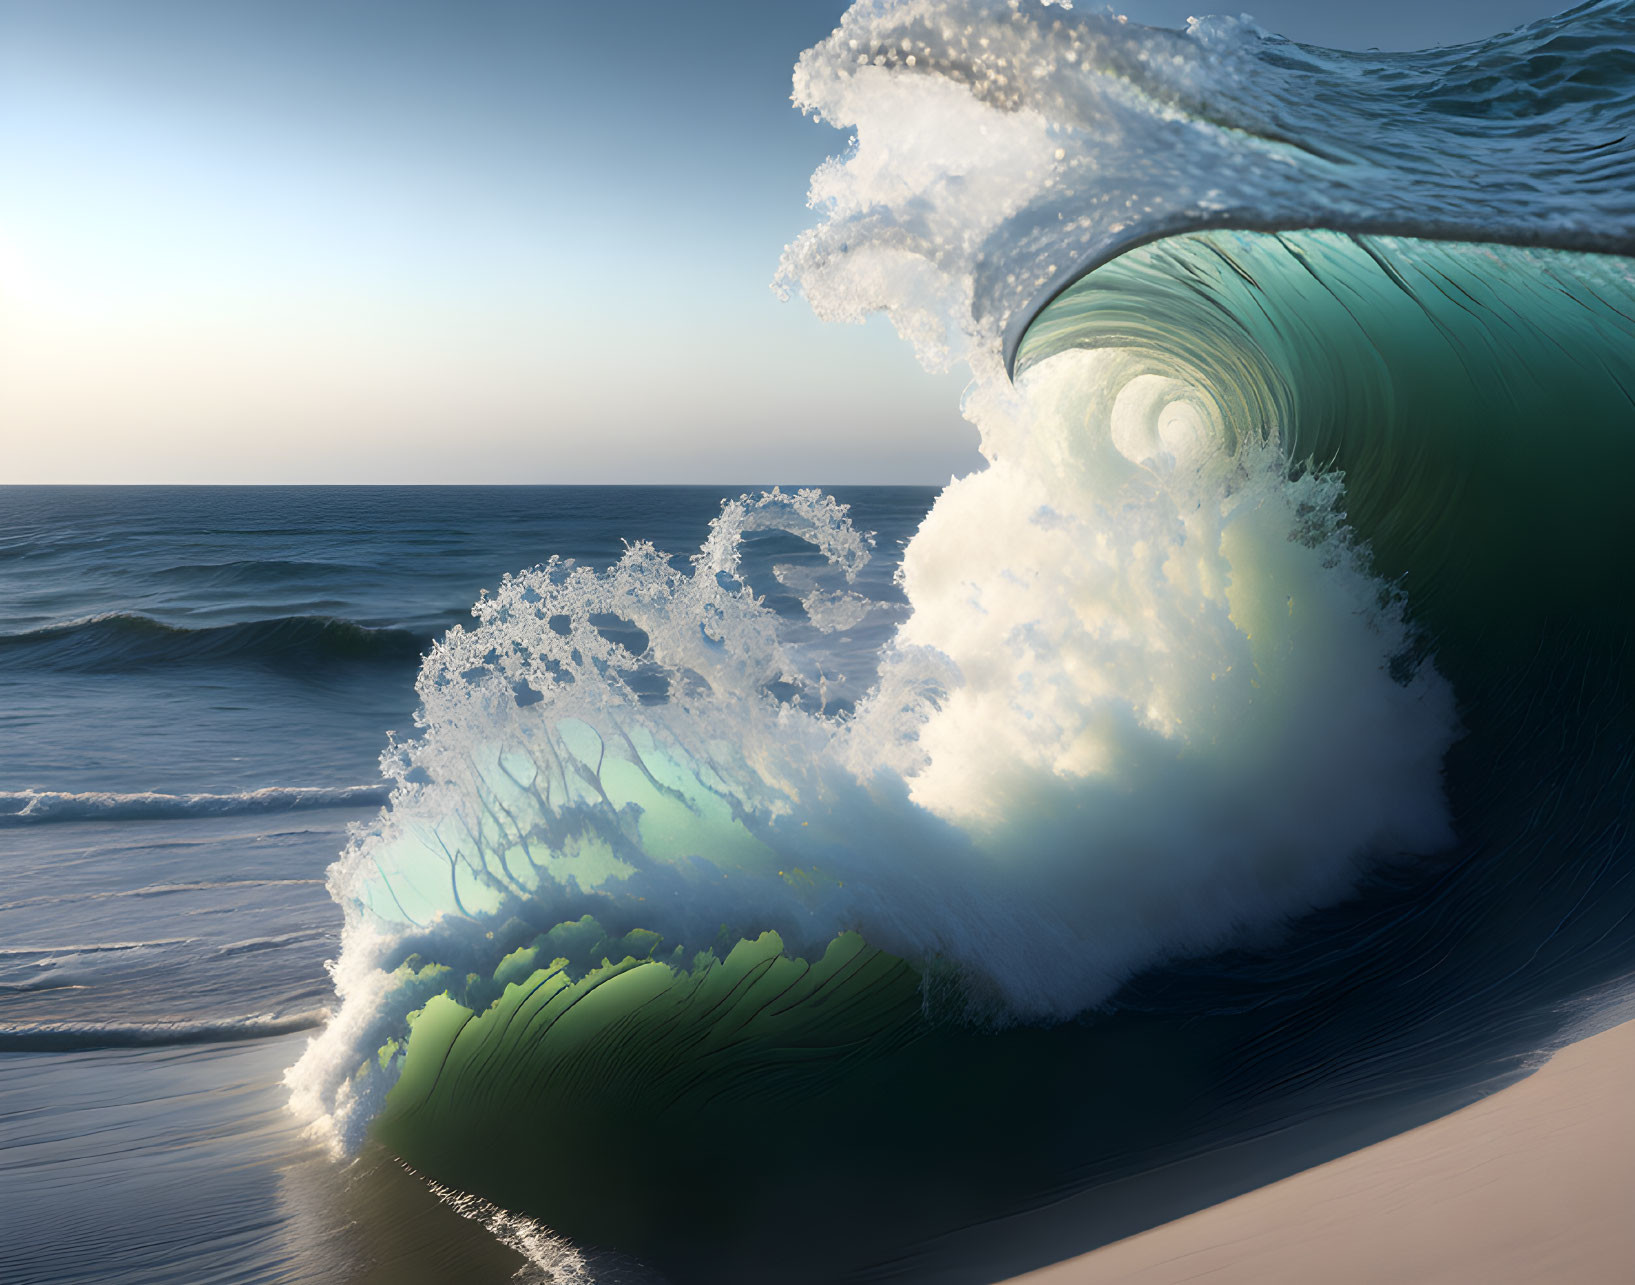 Majestic curling wave with white foam on serene ocean backdrop